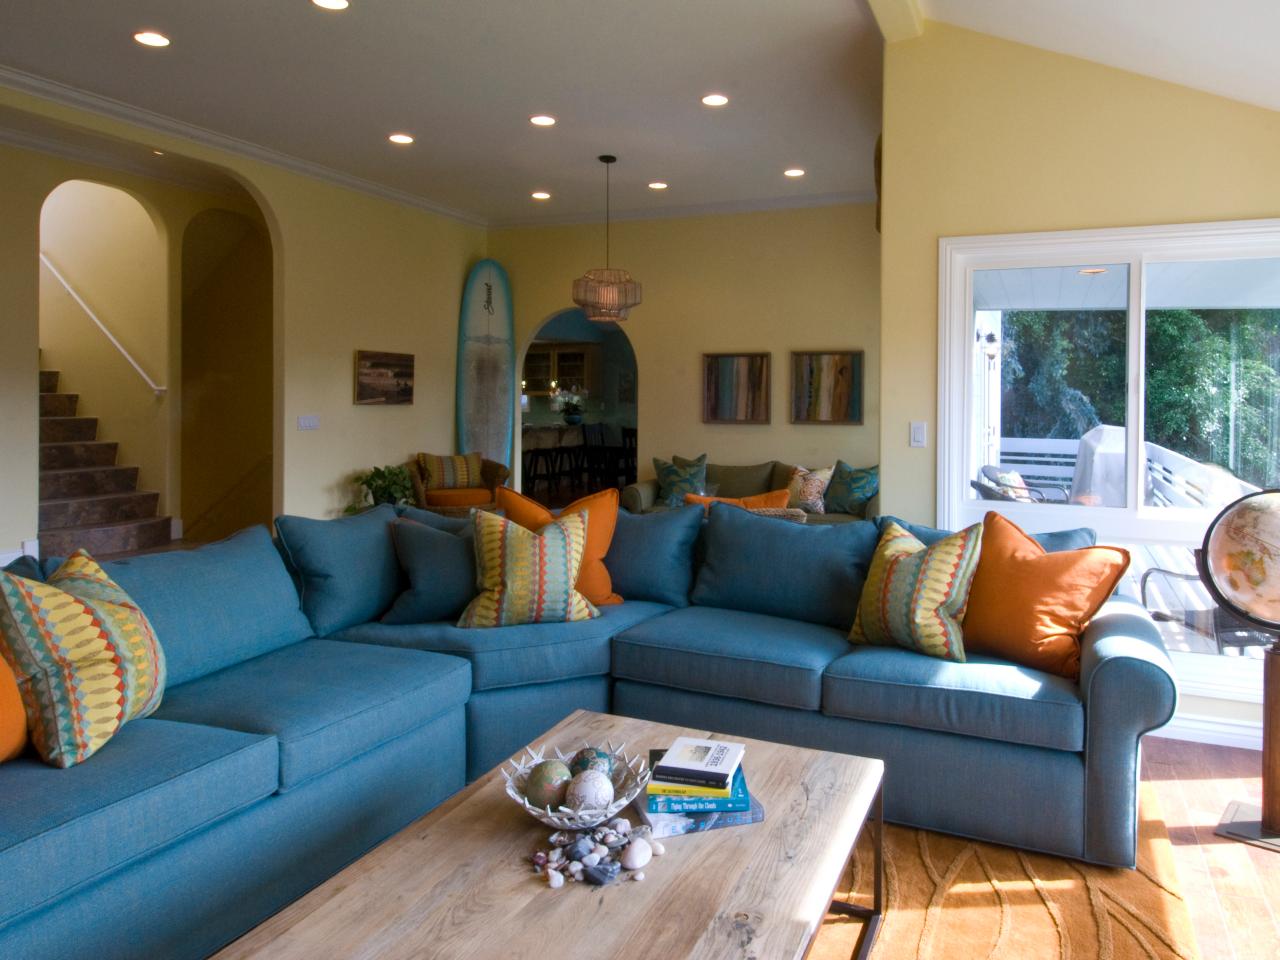 Blue Sectional Sofa in Coastal Yellow Family Room | HGTV